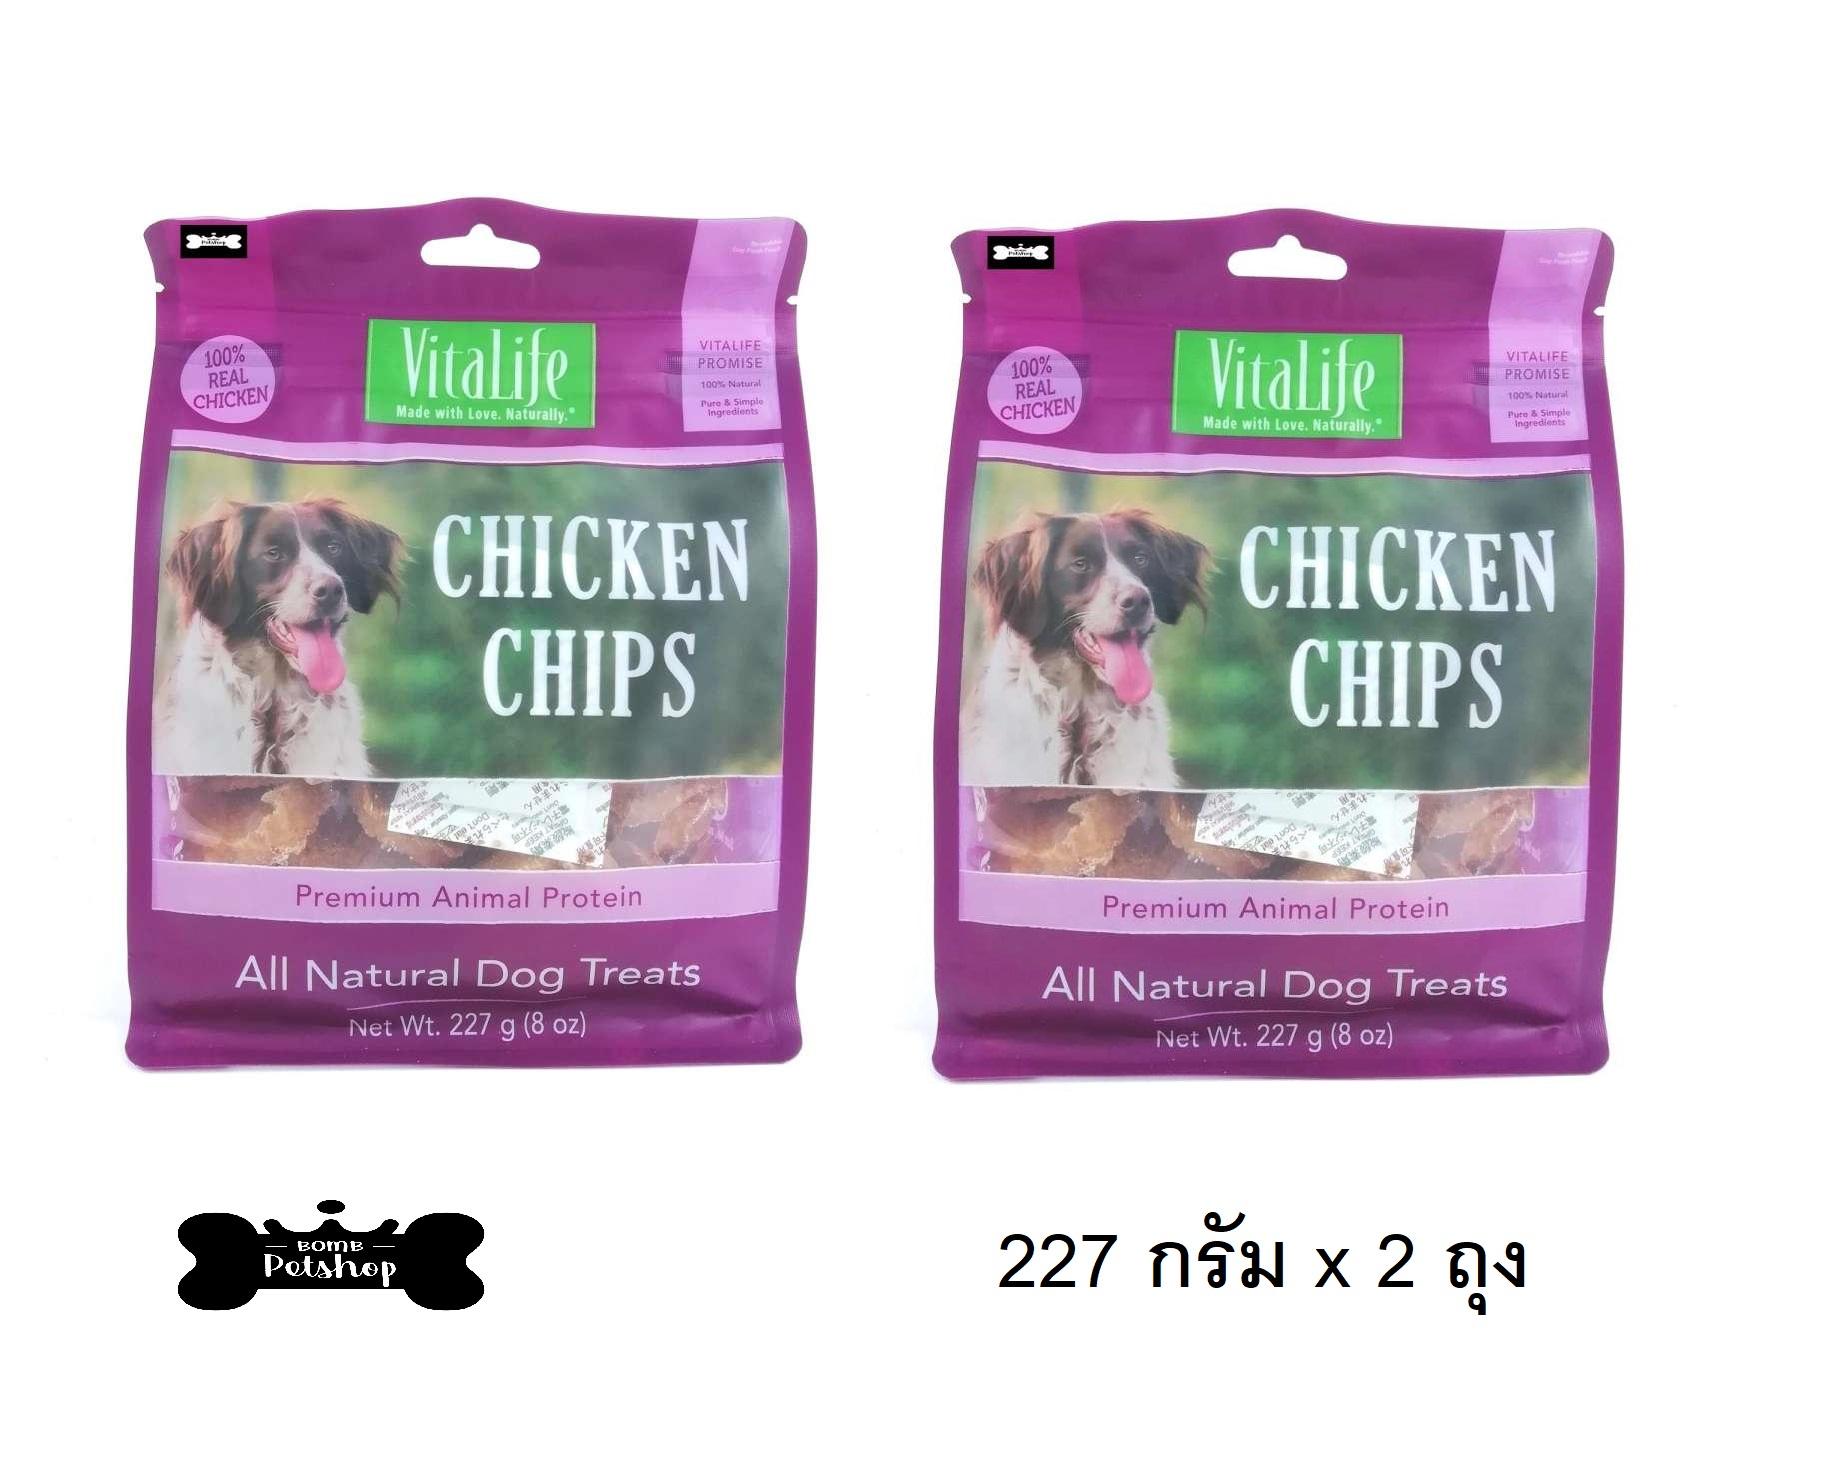 VitaLife Chicken Chips 227g ขนมสุนัข ไก่ชิ้น สันในไก่อบแห้งแท้ 100% เนื้อไก่ชิ้นเล็ก 227g x 2 ถุง